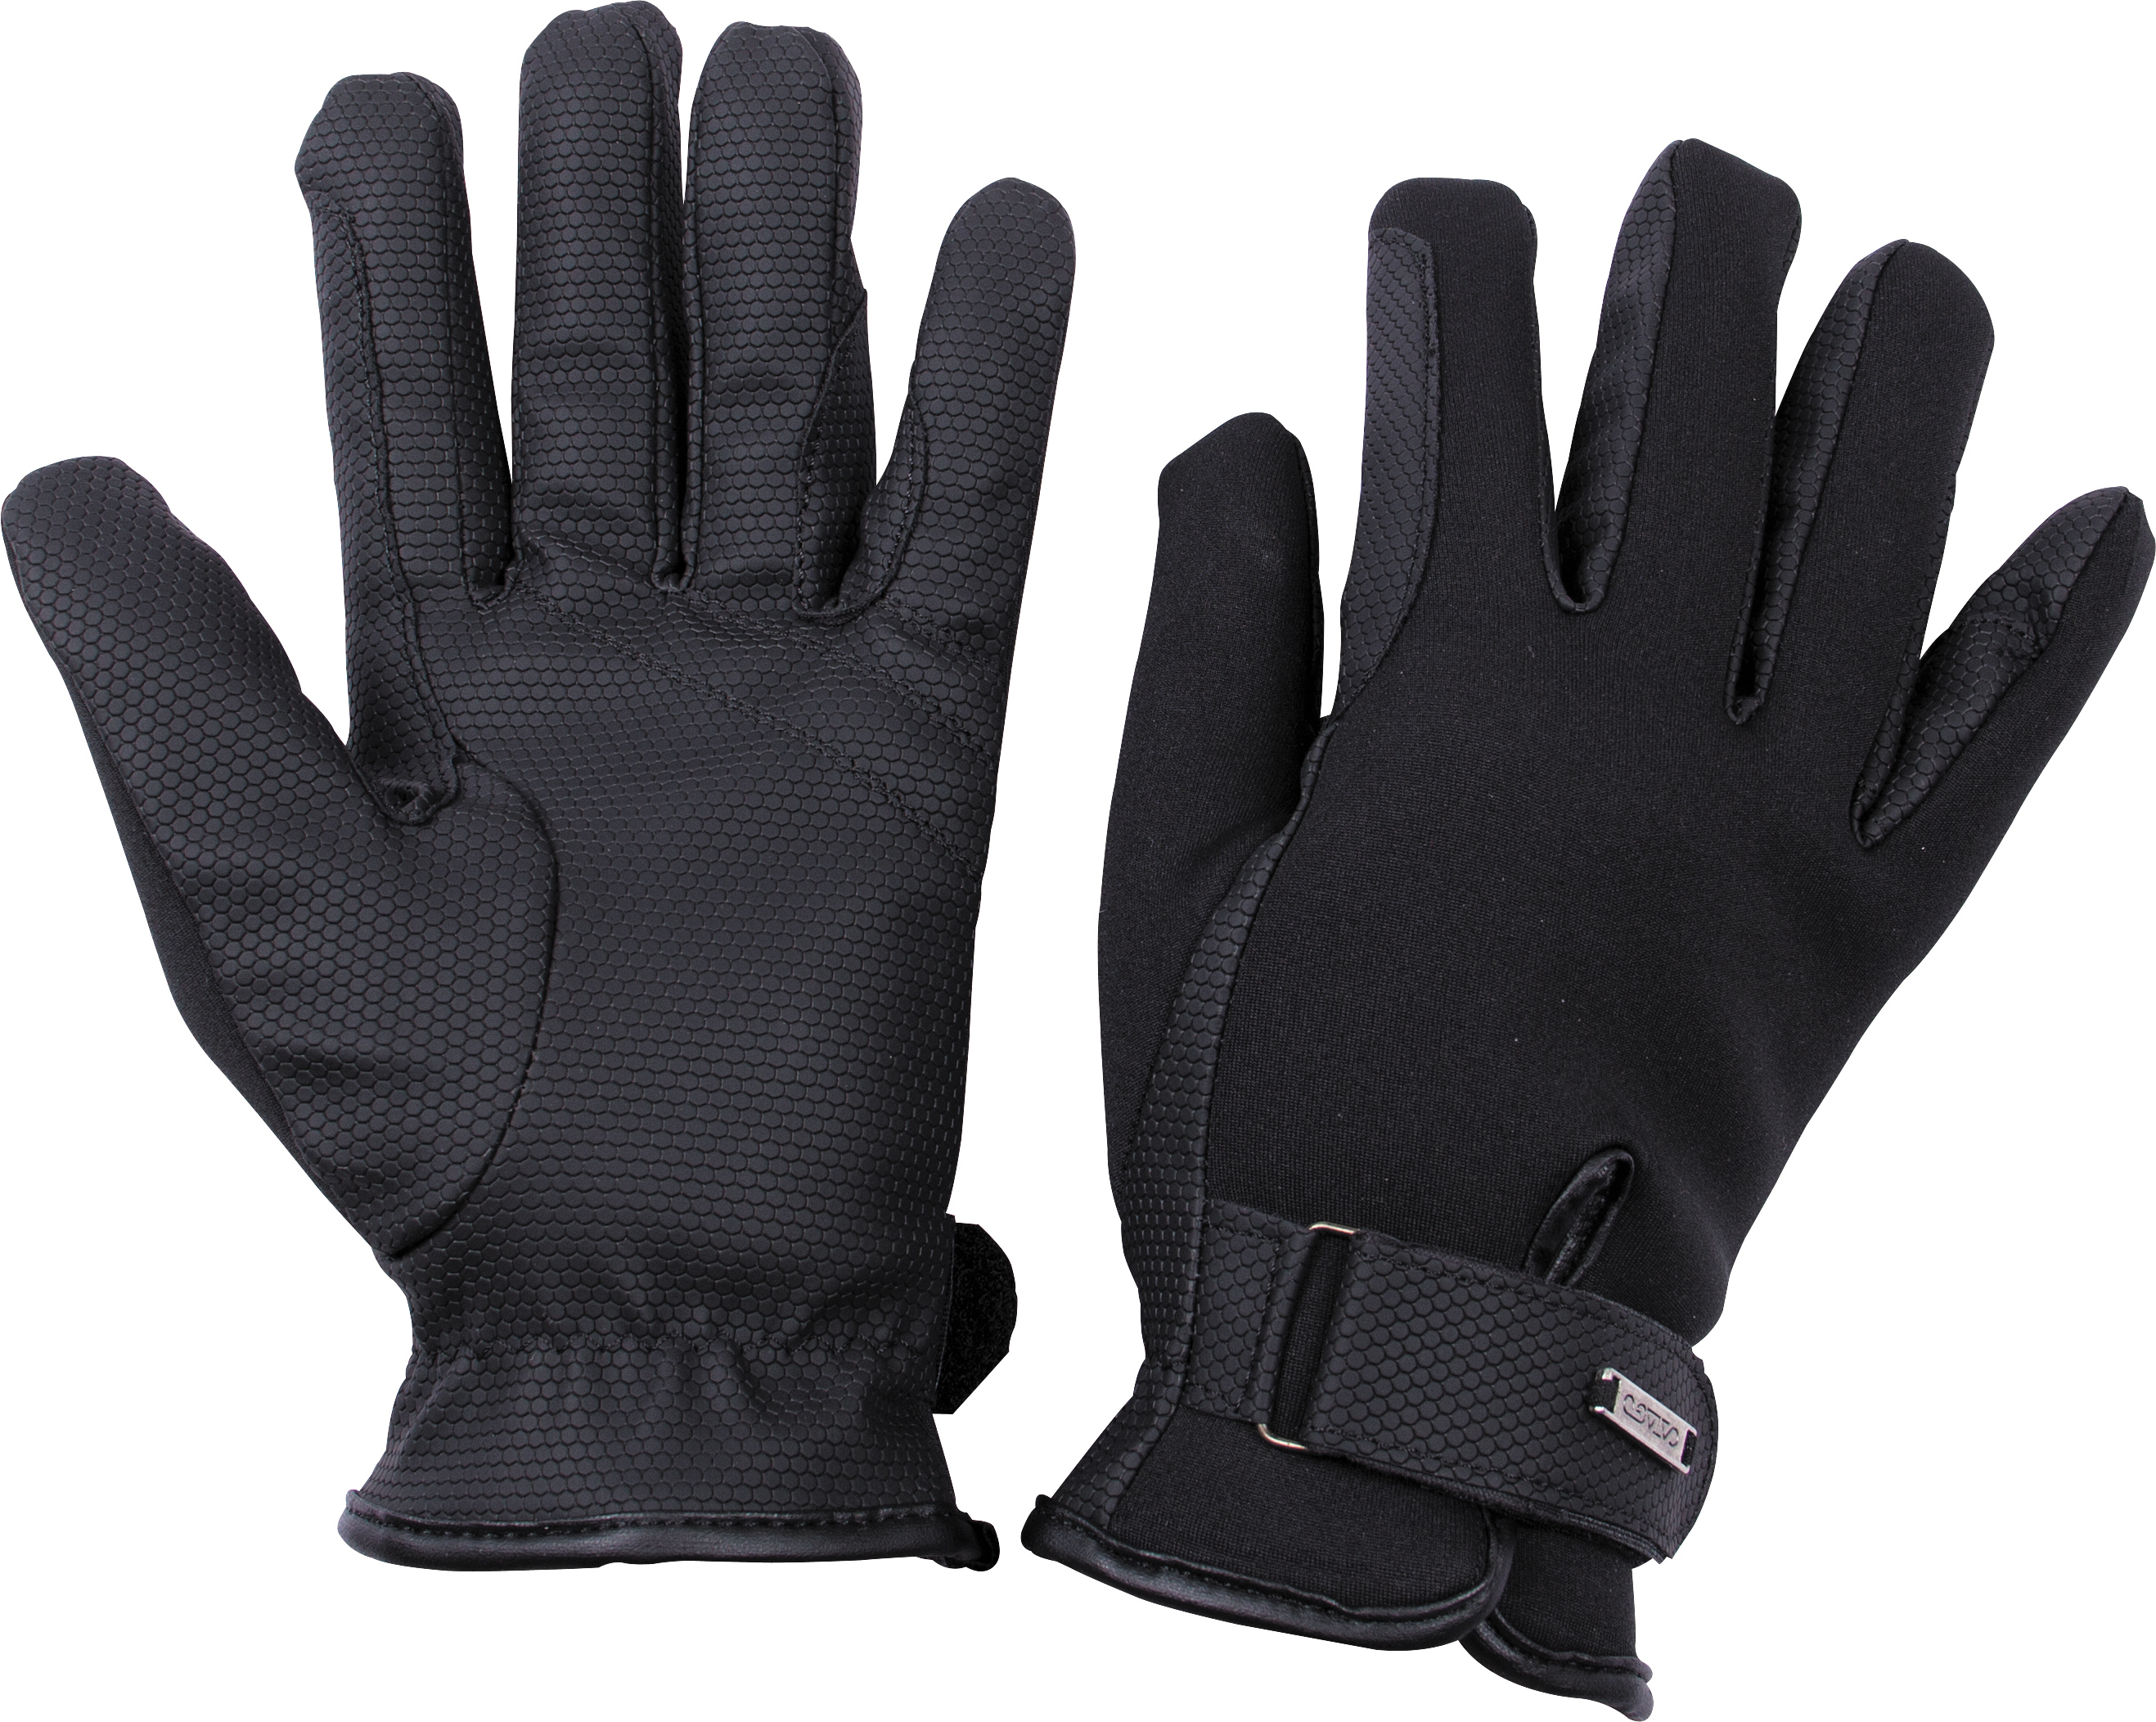 Equipage Pro Neoprene Glove - Black (XS)